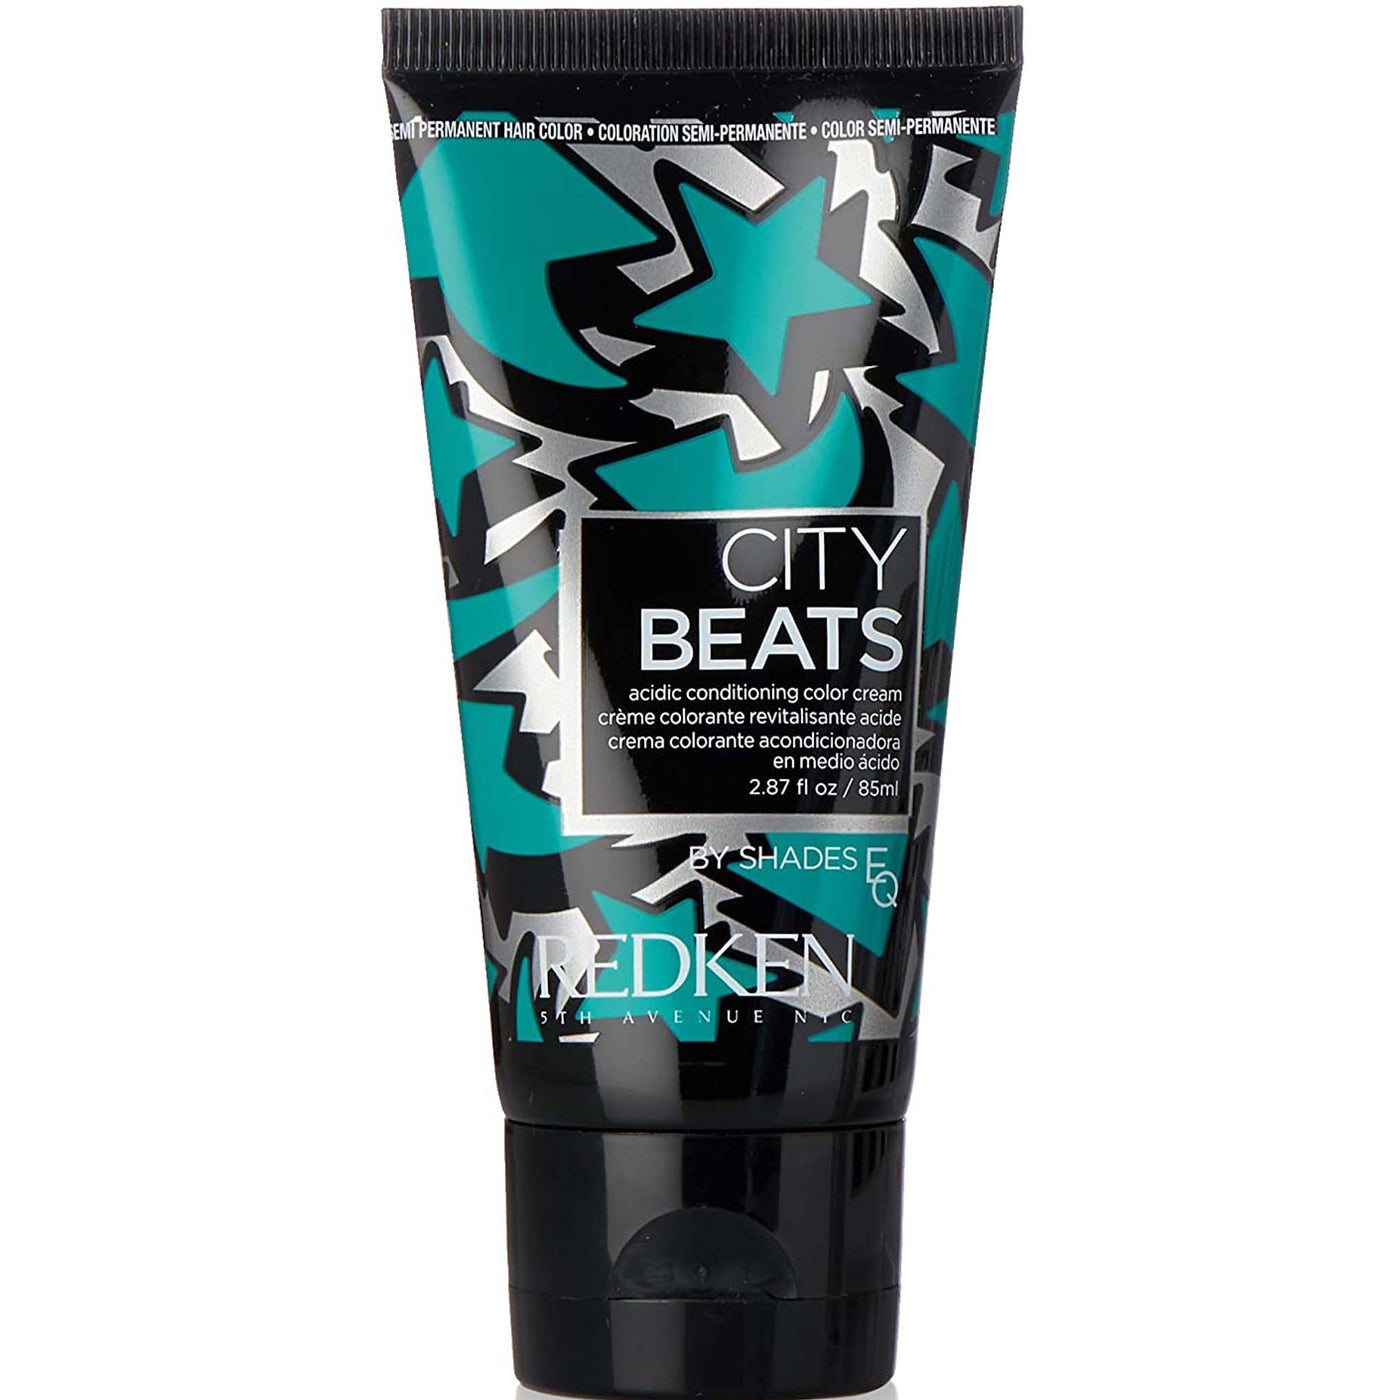 Redken City Beats by Shades EQ Semi Permanent Hair Colour 85ml